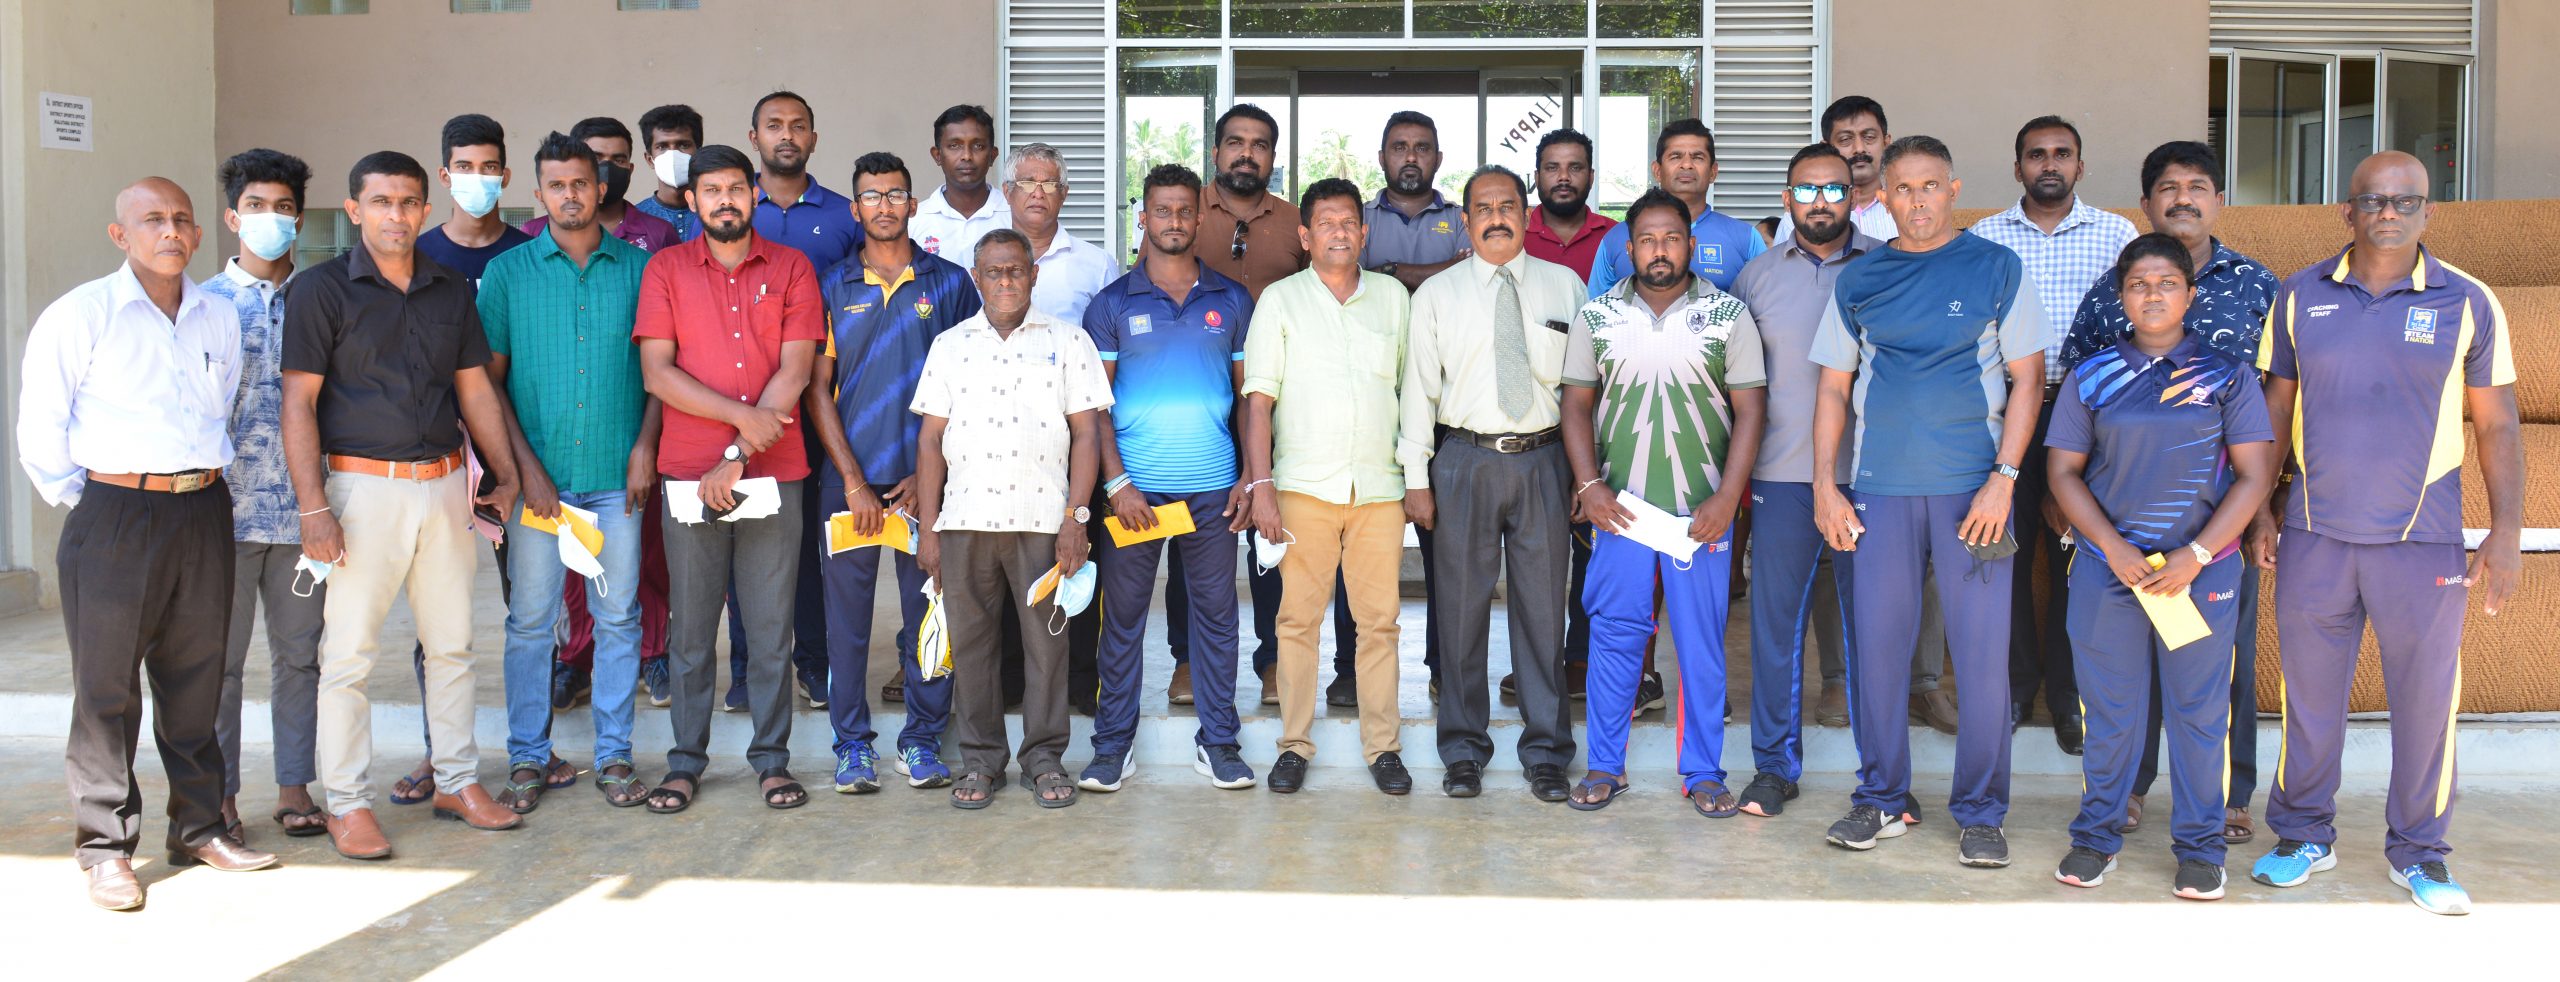 Sri Lanka Cricket donated 200 Cricket Mattings to develop school cricket